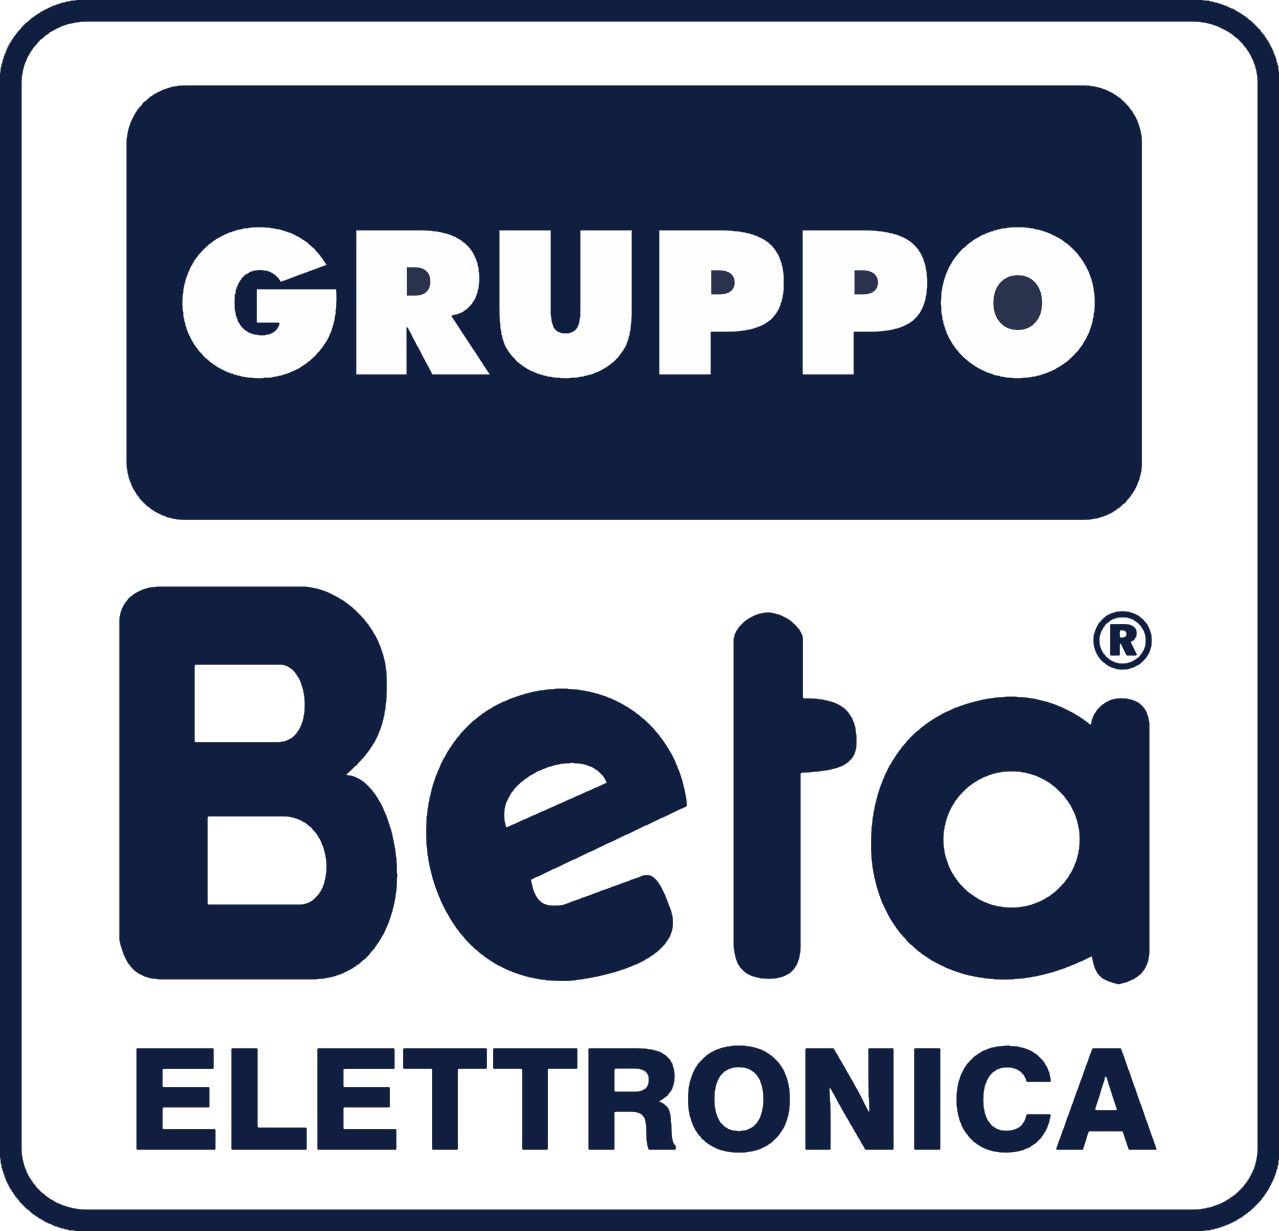 Beta Elettronica